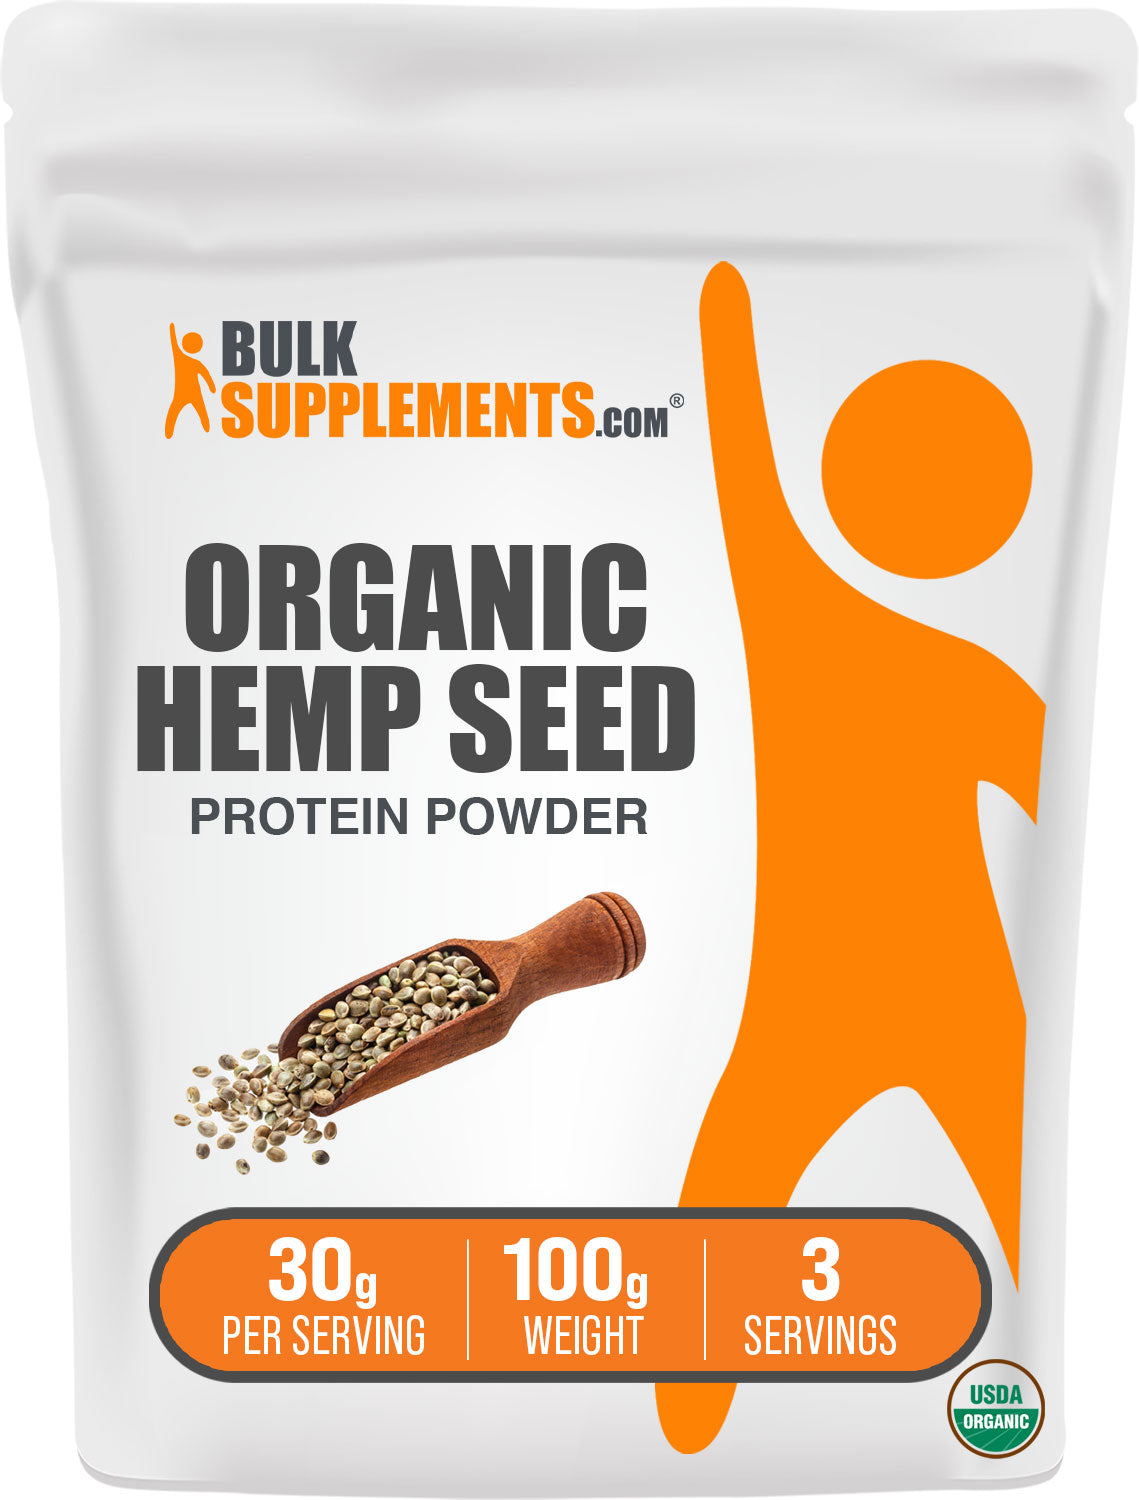 BulkSupplements.com Organic Hemp Seed Protein Powder 100g bag image